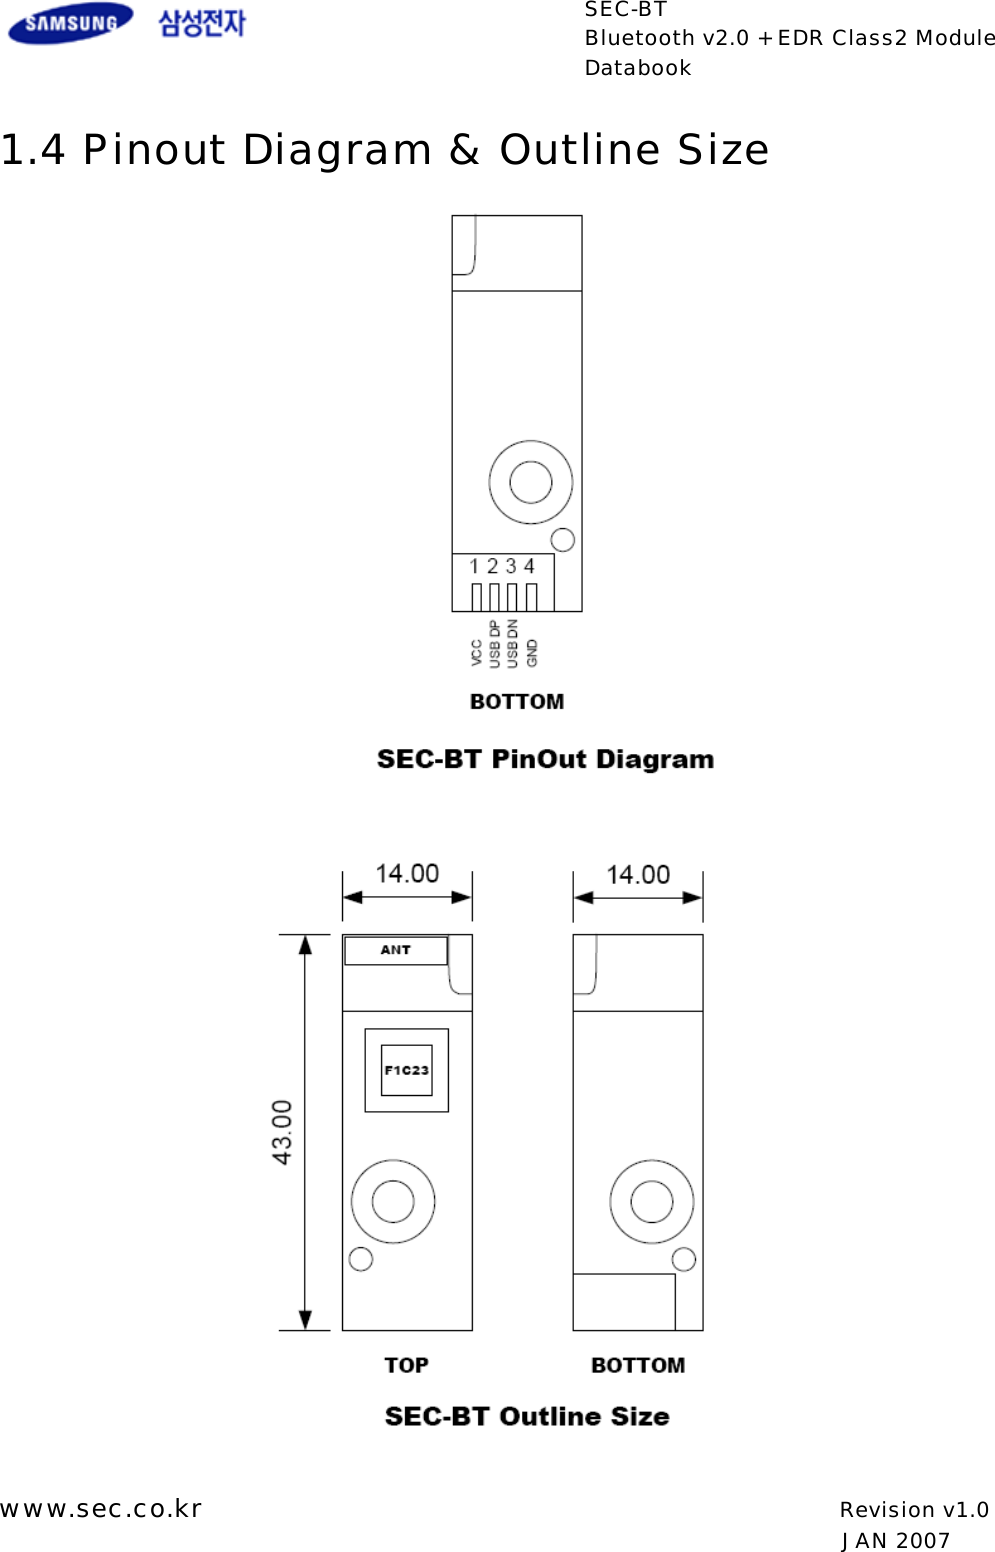  SEC-BT Bluetooth v2.0 + EDR Class2 Module Databook  www.sec.co.kr                                                   Revision v1.0                                                                                  JAN 2007 1.4 Pinout Diagram &amp; Outline Size   